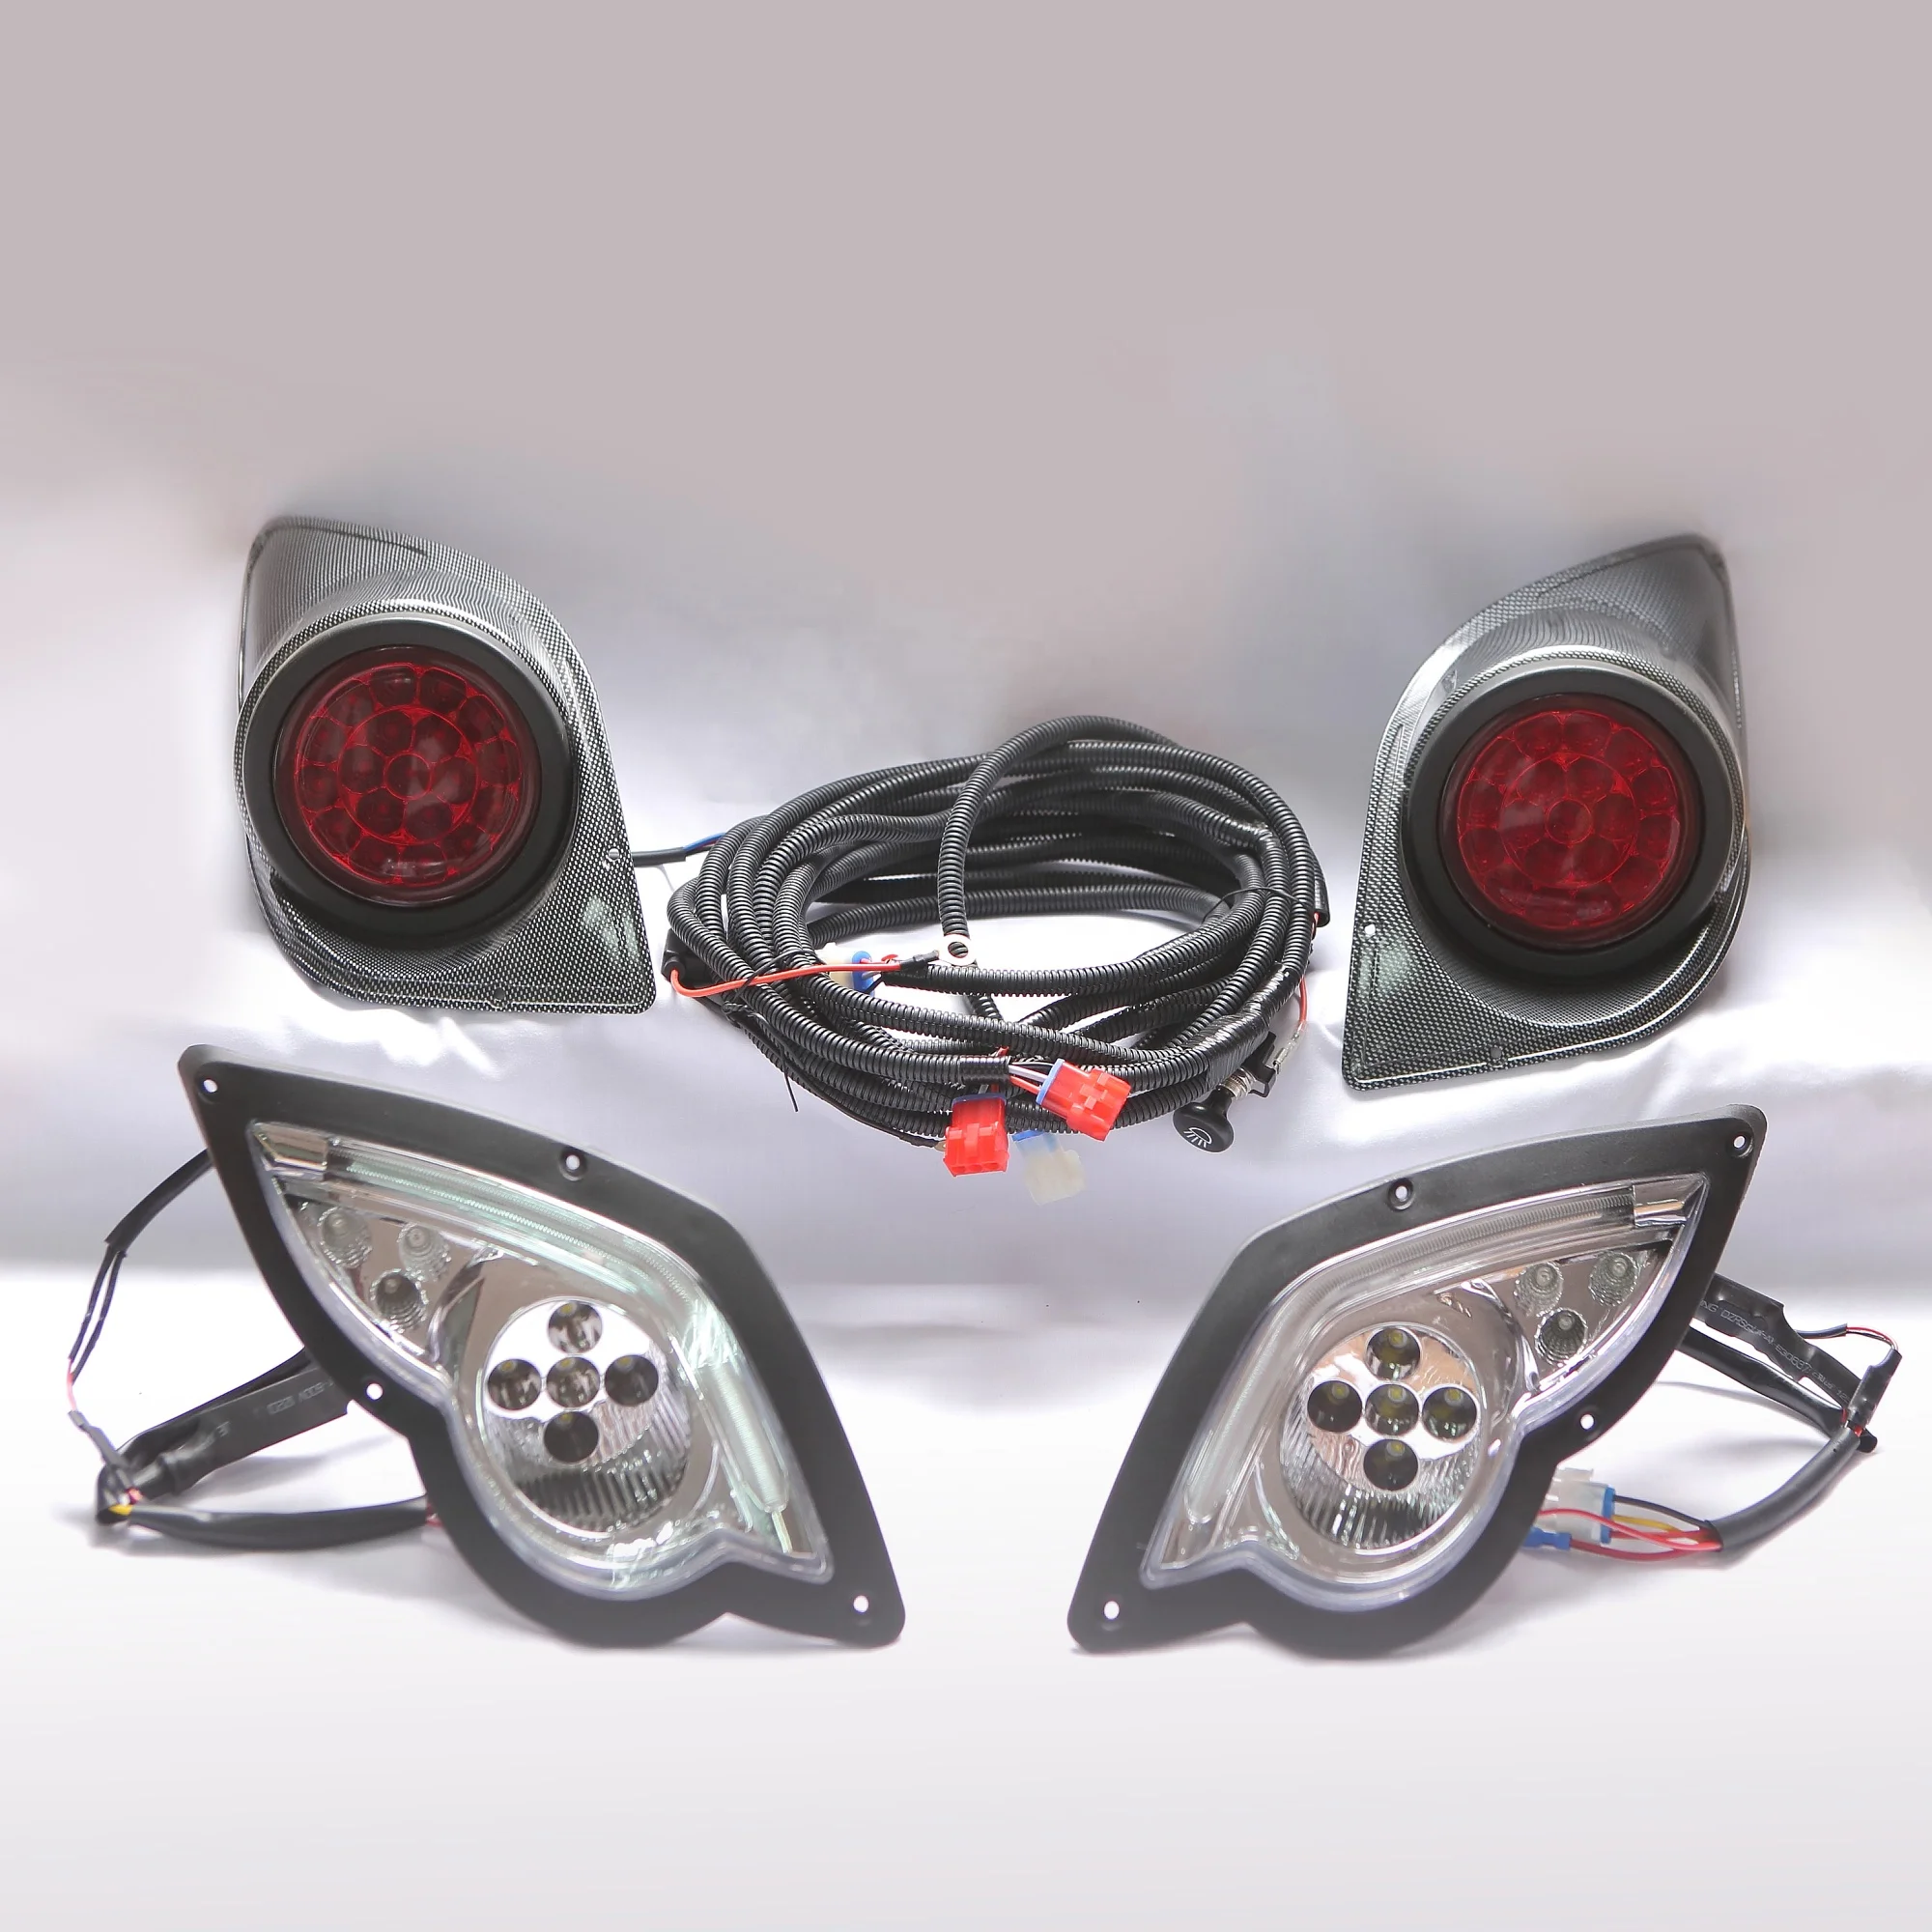 Shenzhen Manufacturer Golf Cart Accessories, Golf Cart LED Light Kit for YMH Driver